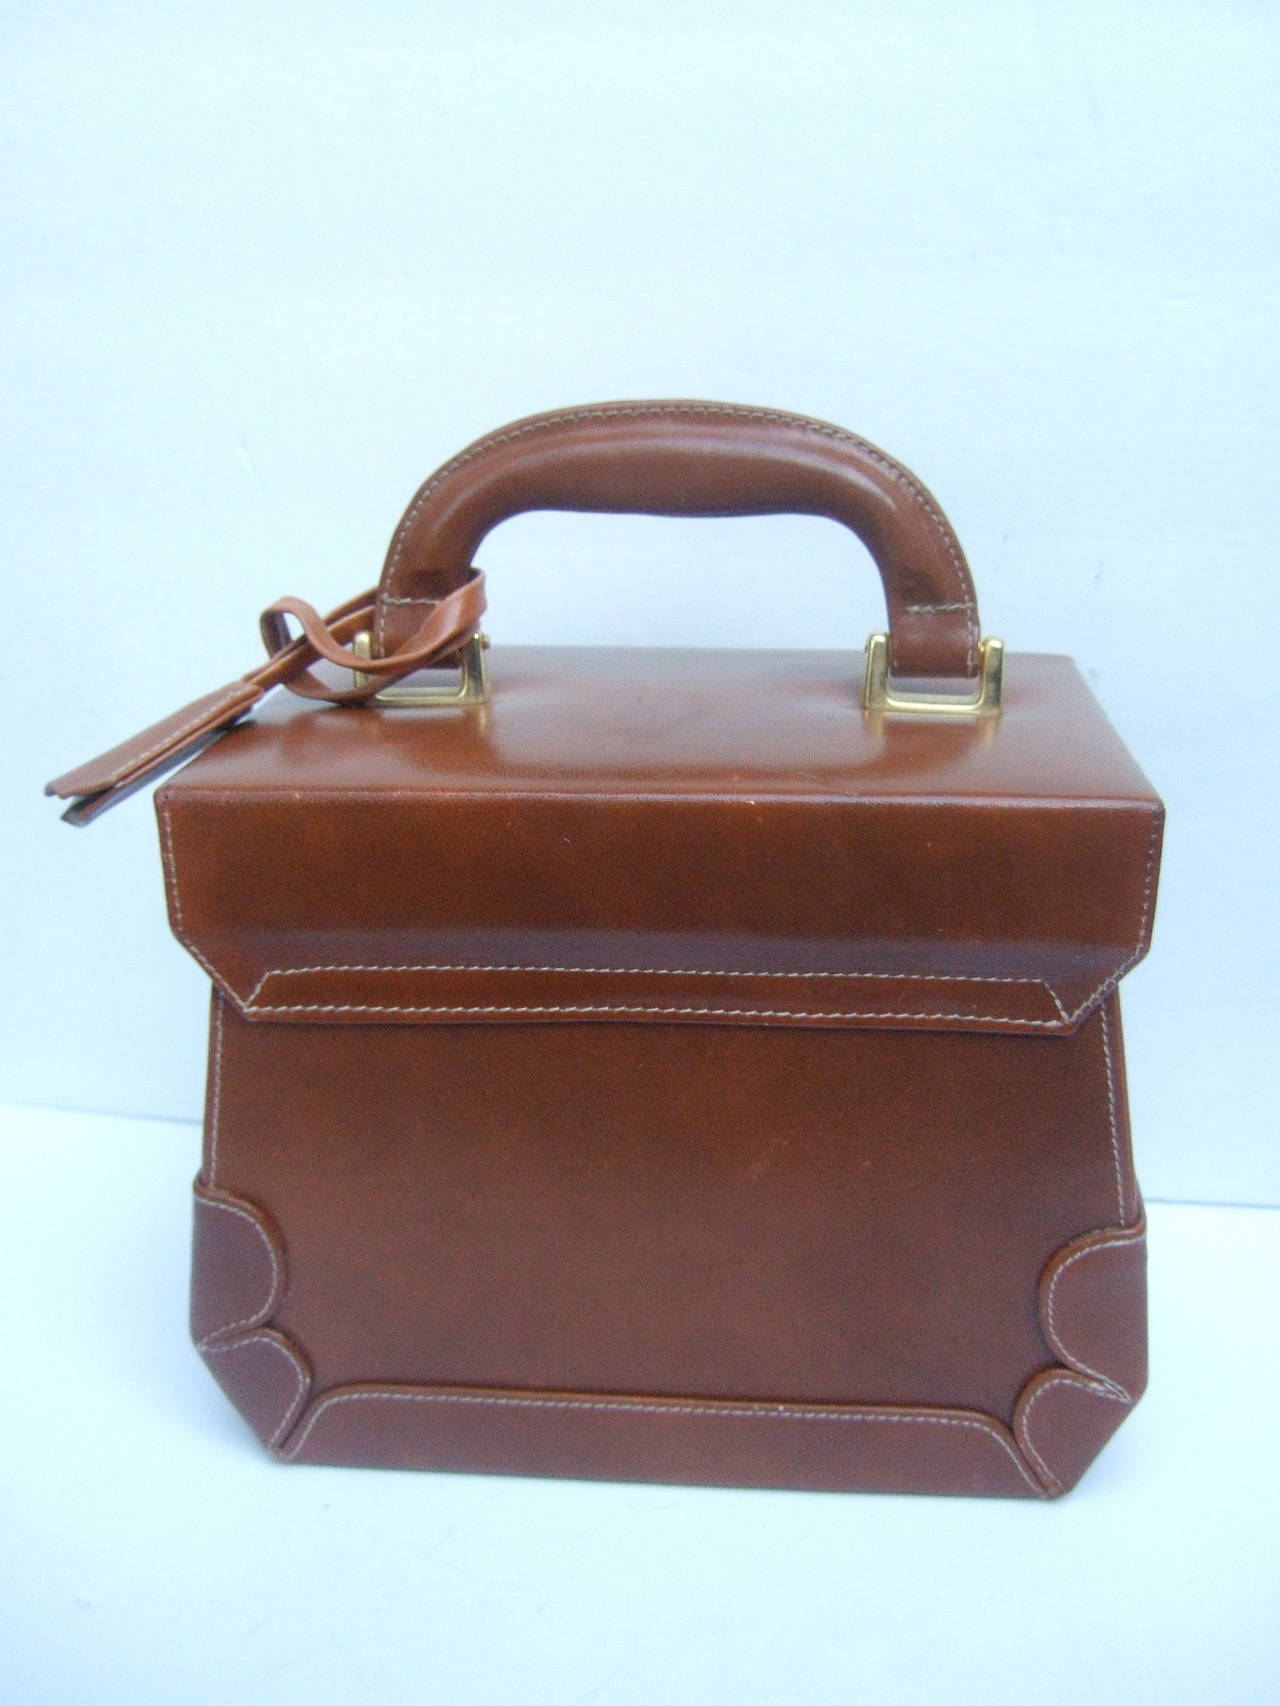 Henri Bendel Caramel Brown Leather Train Case Handbag Made in Italy 2